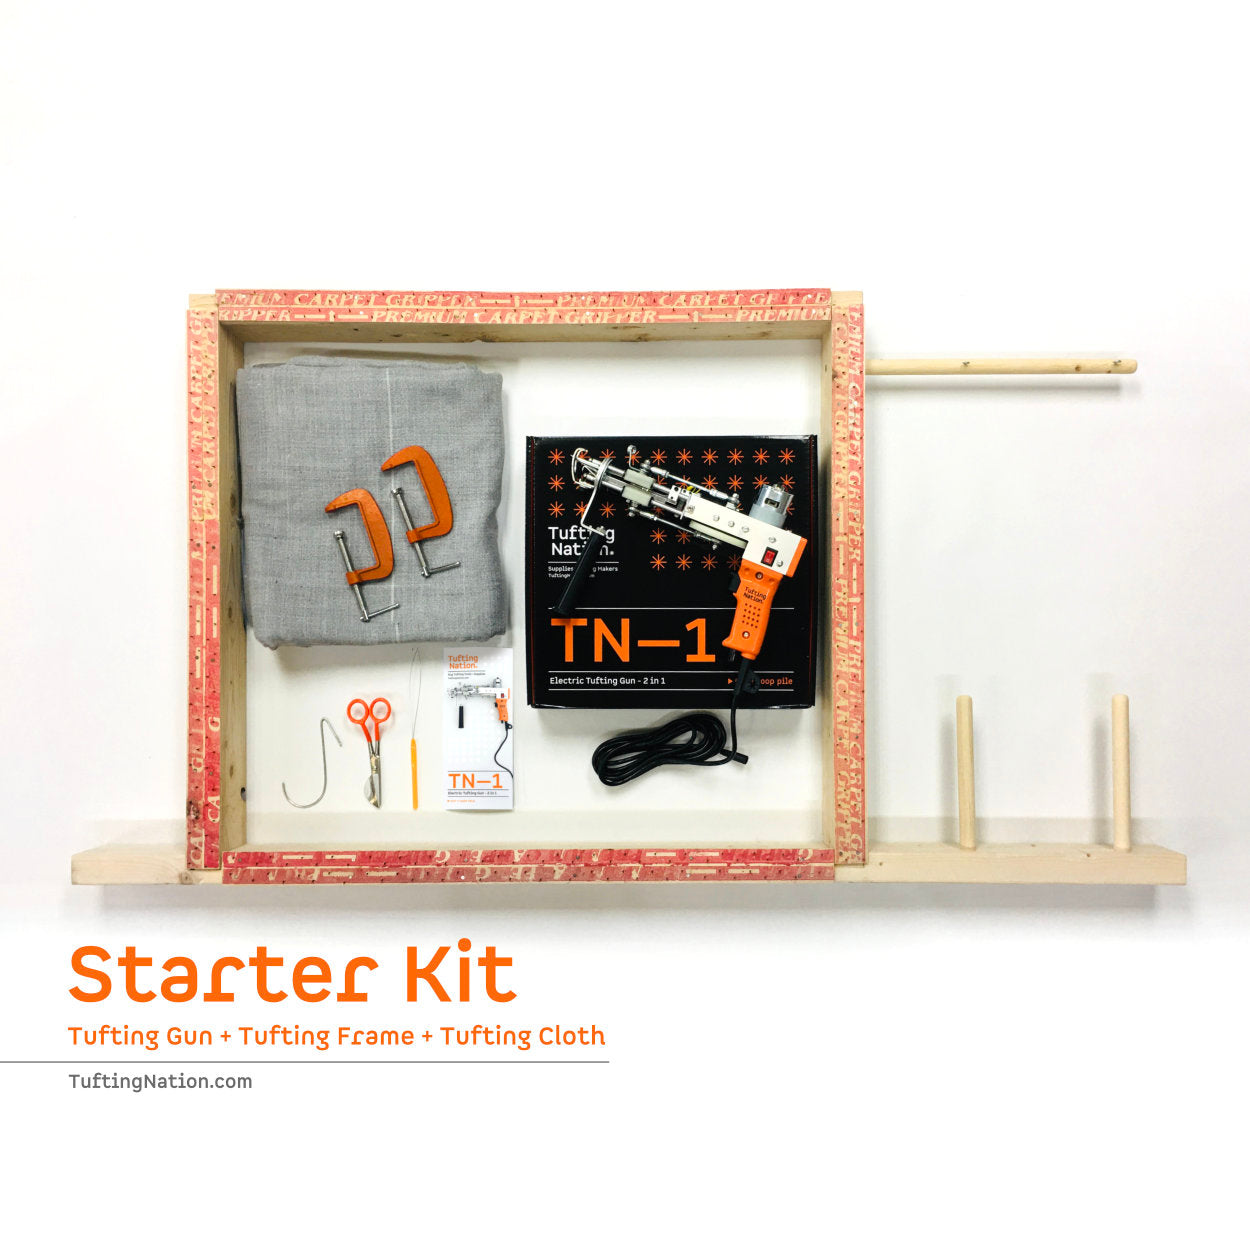 Tufting Starter Kit including Tufting Gun, Tufting Frame and Tufting Cloth